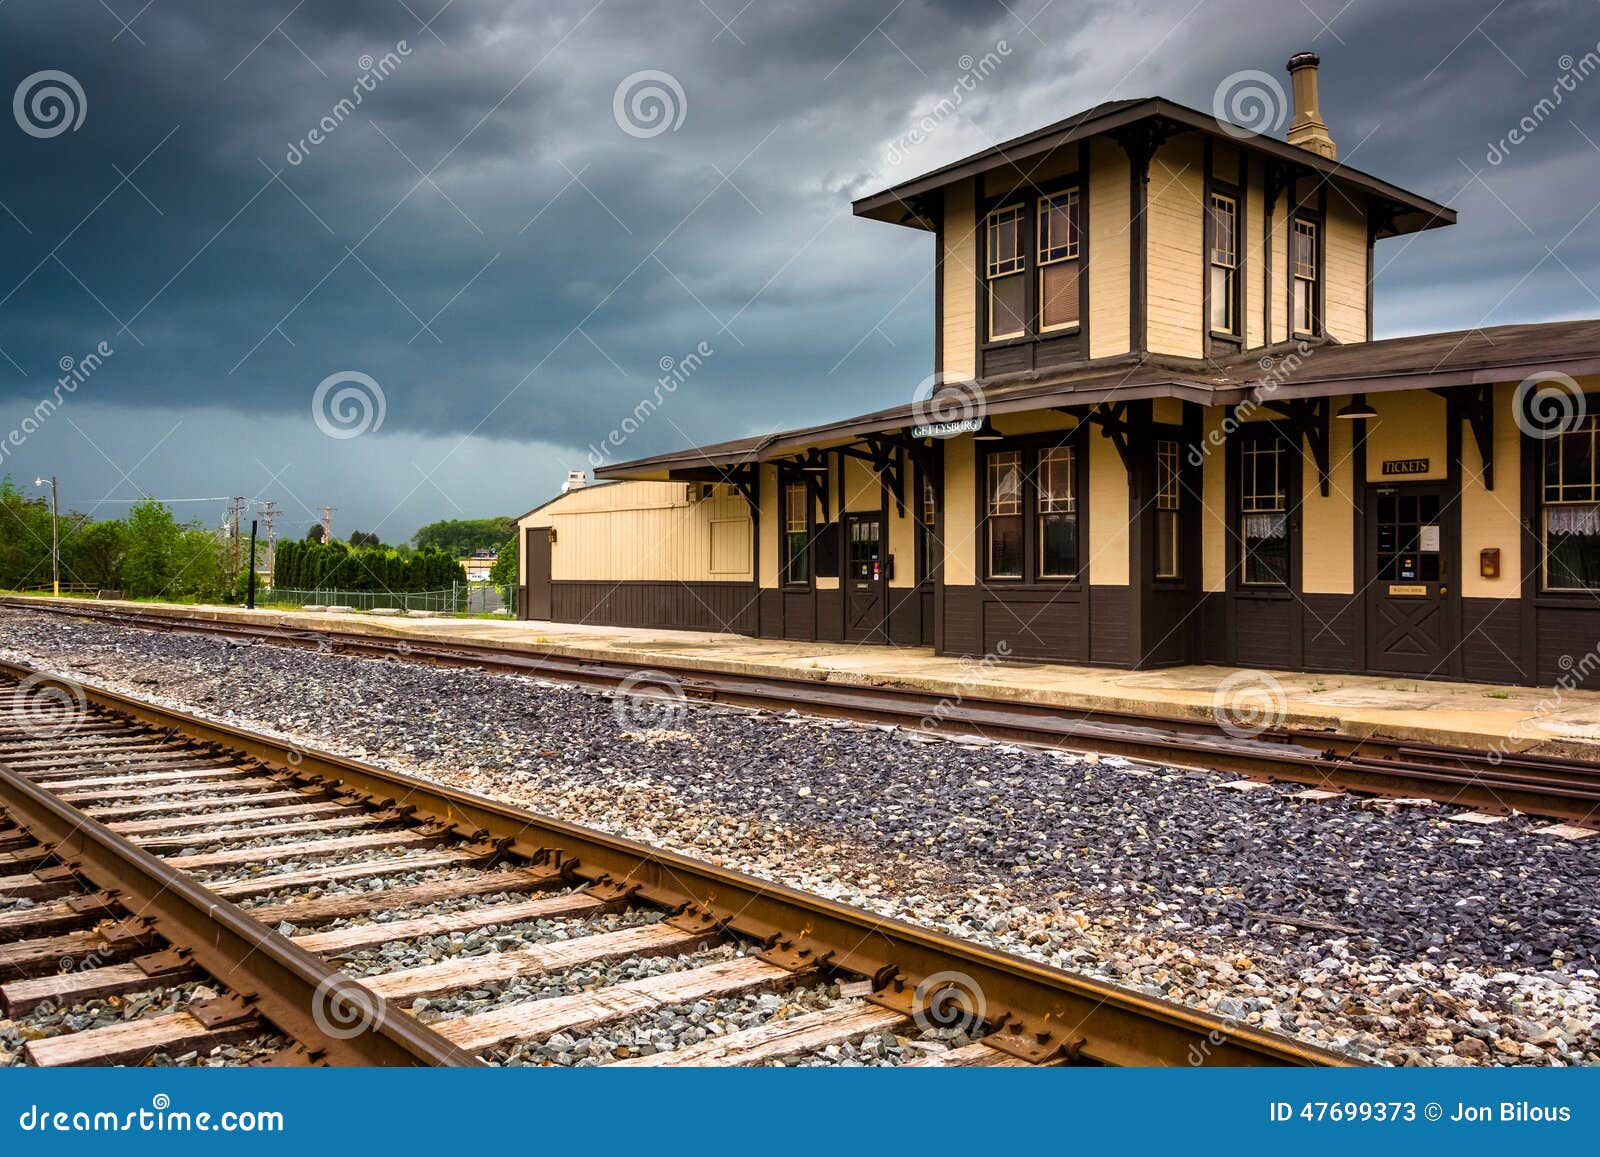 the historic train station in gettysburg, pennsylvania.